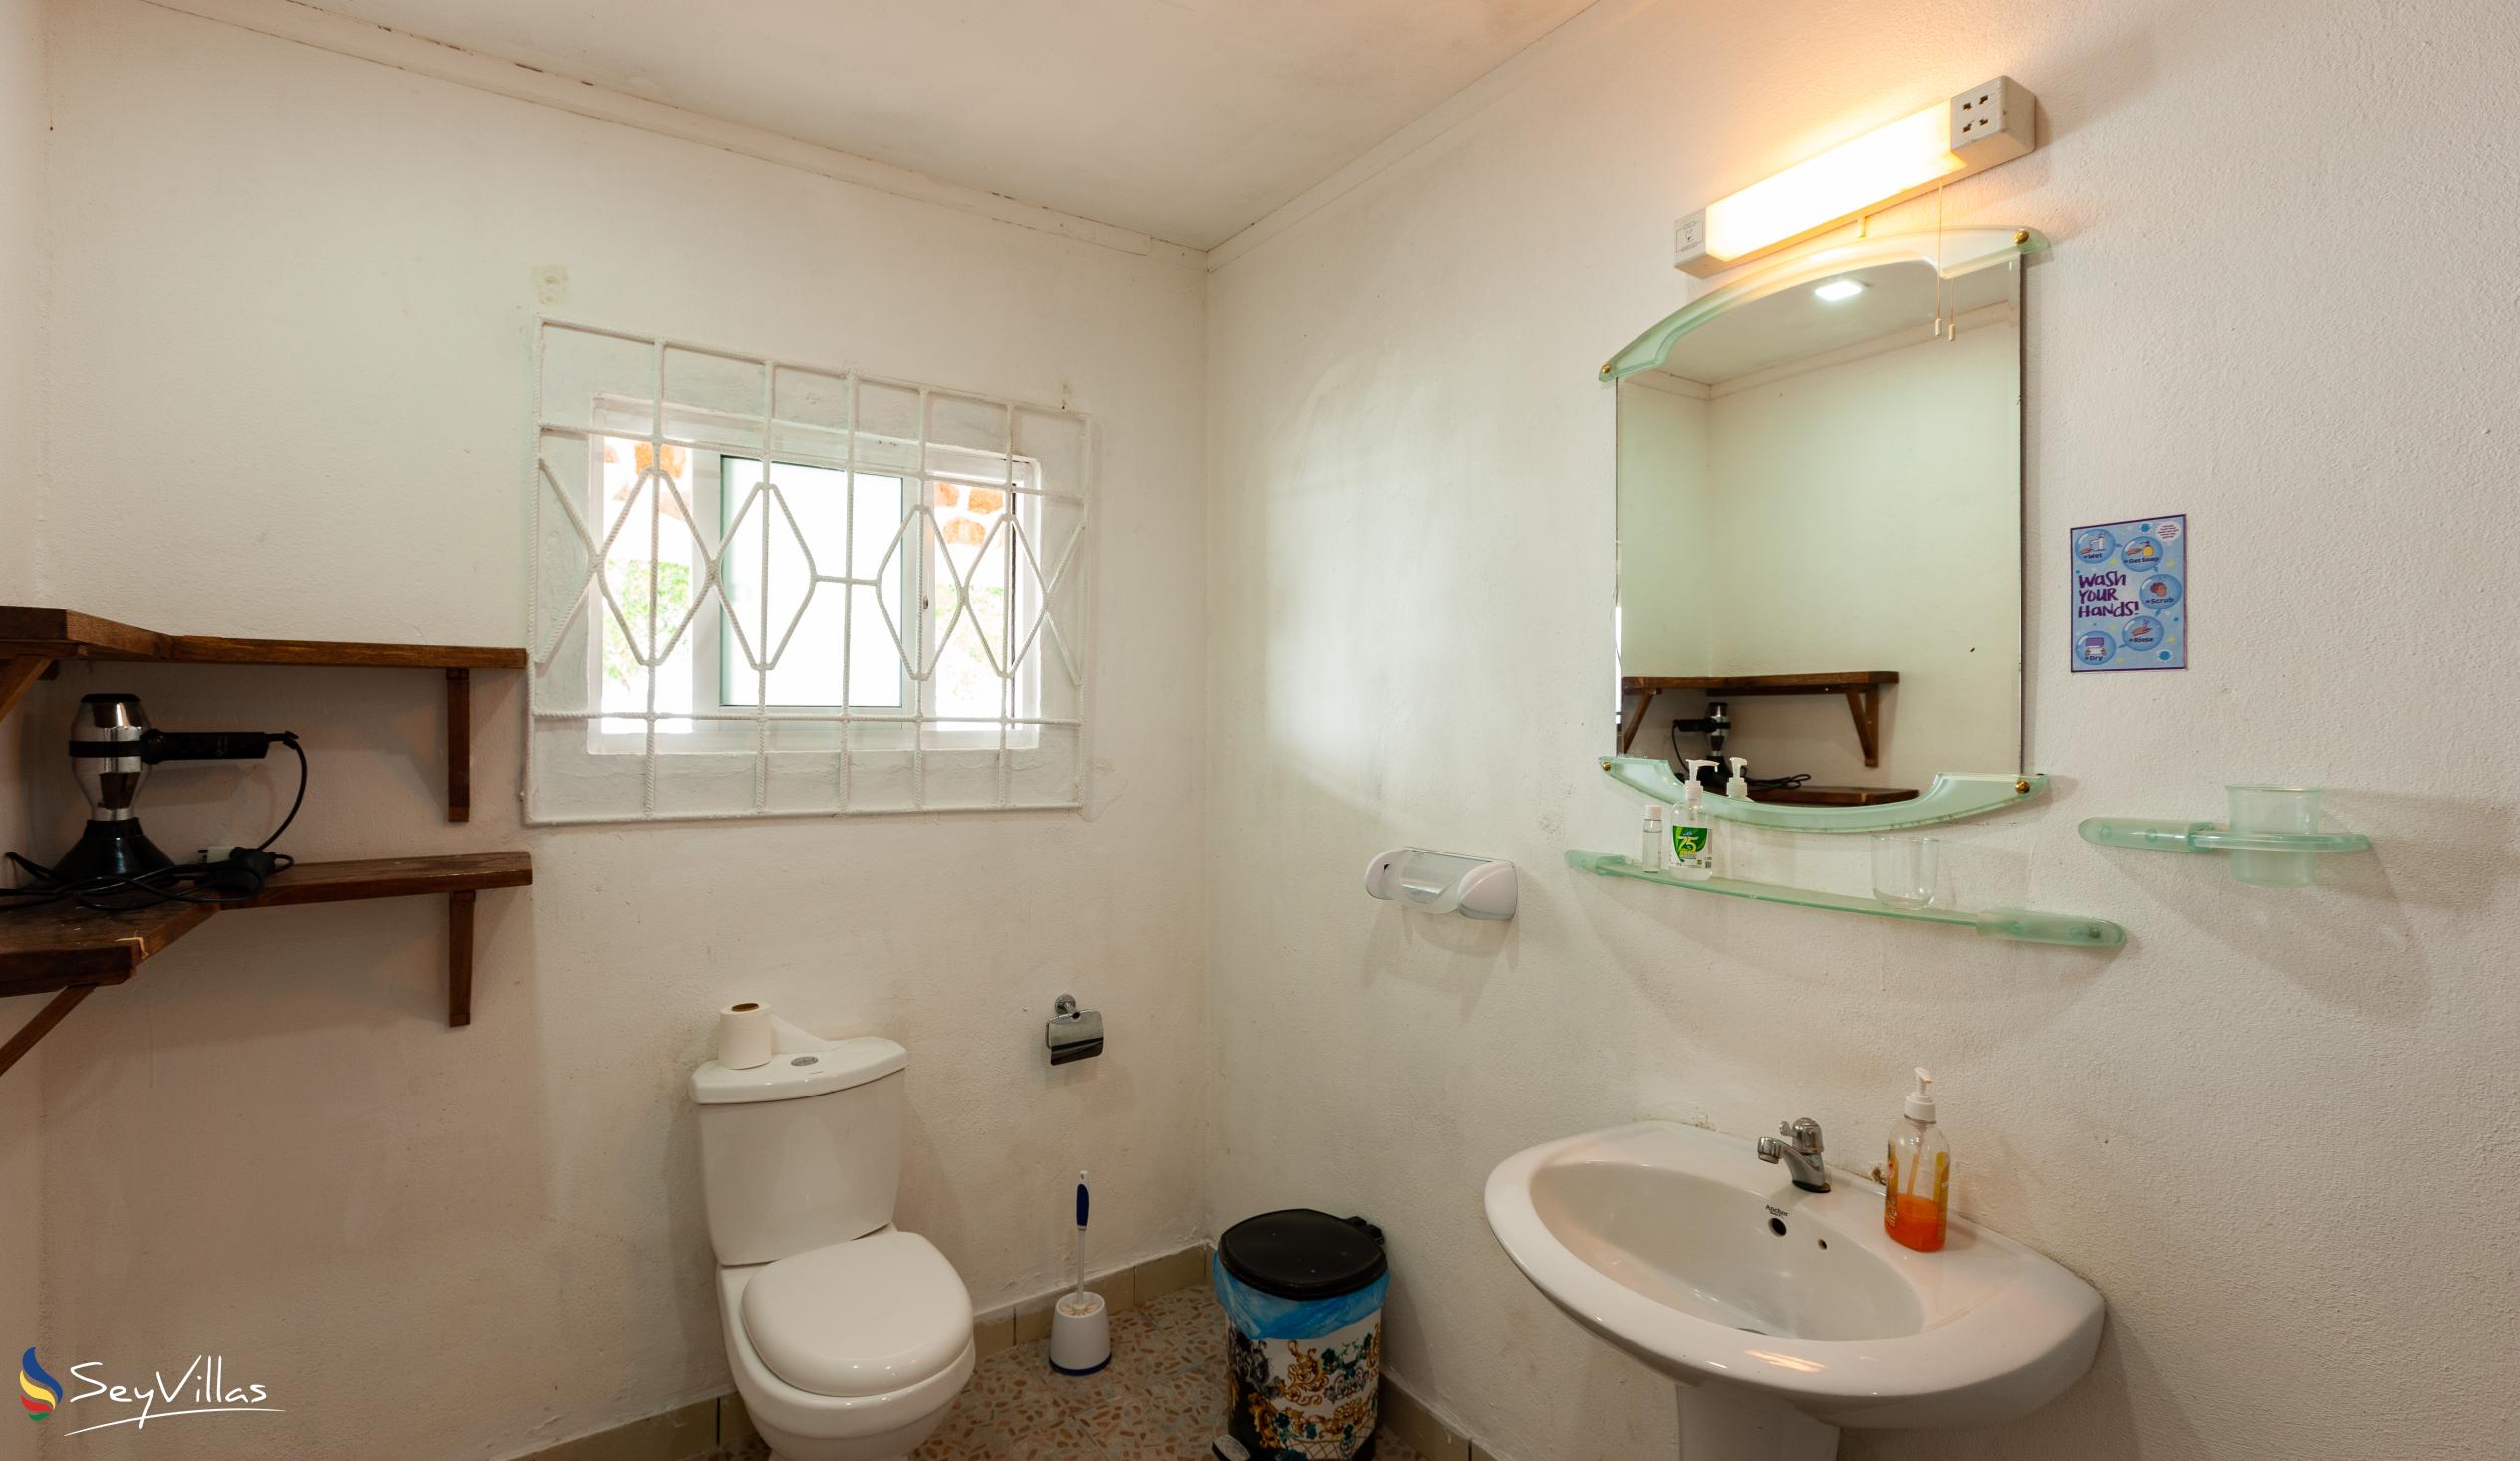 Foto 55: Maison du Soleil - Villa 2 chambres - Praslin (Seychelles)